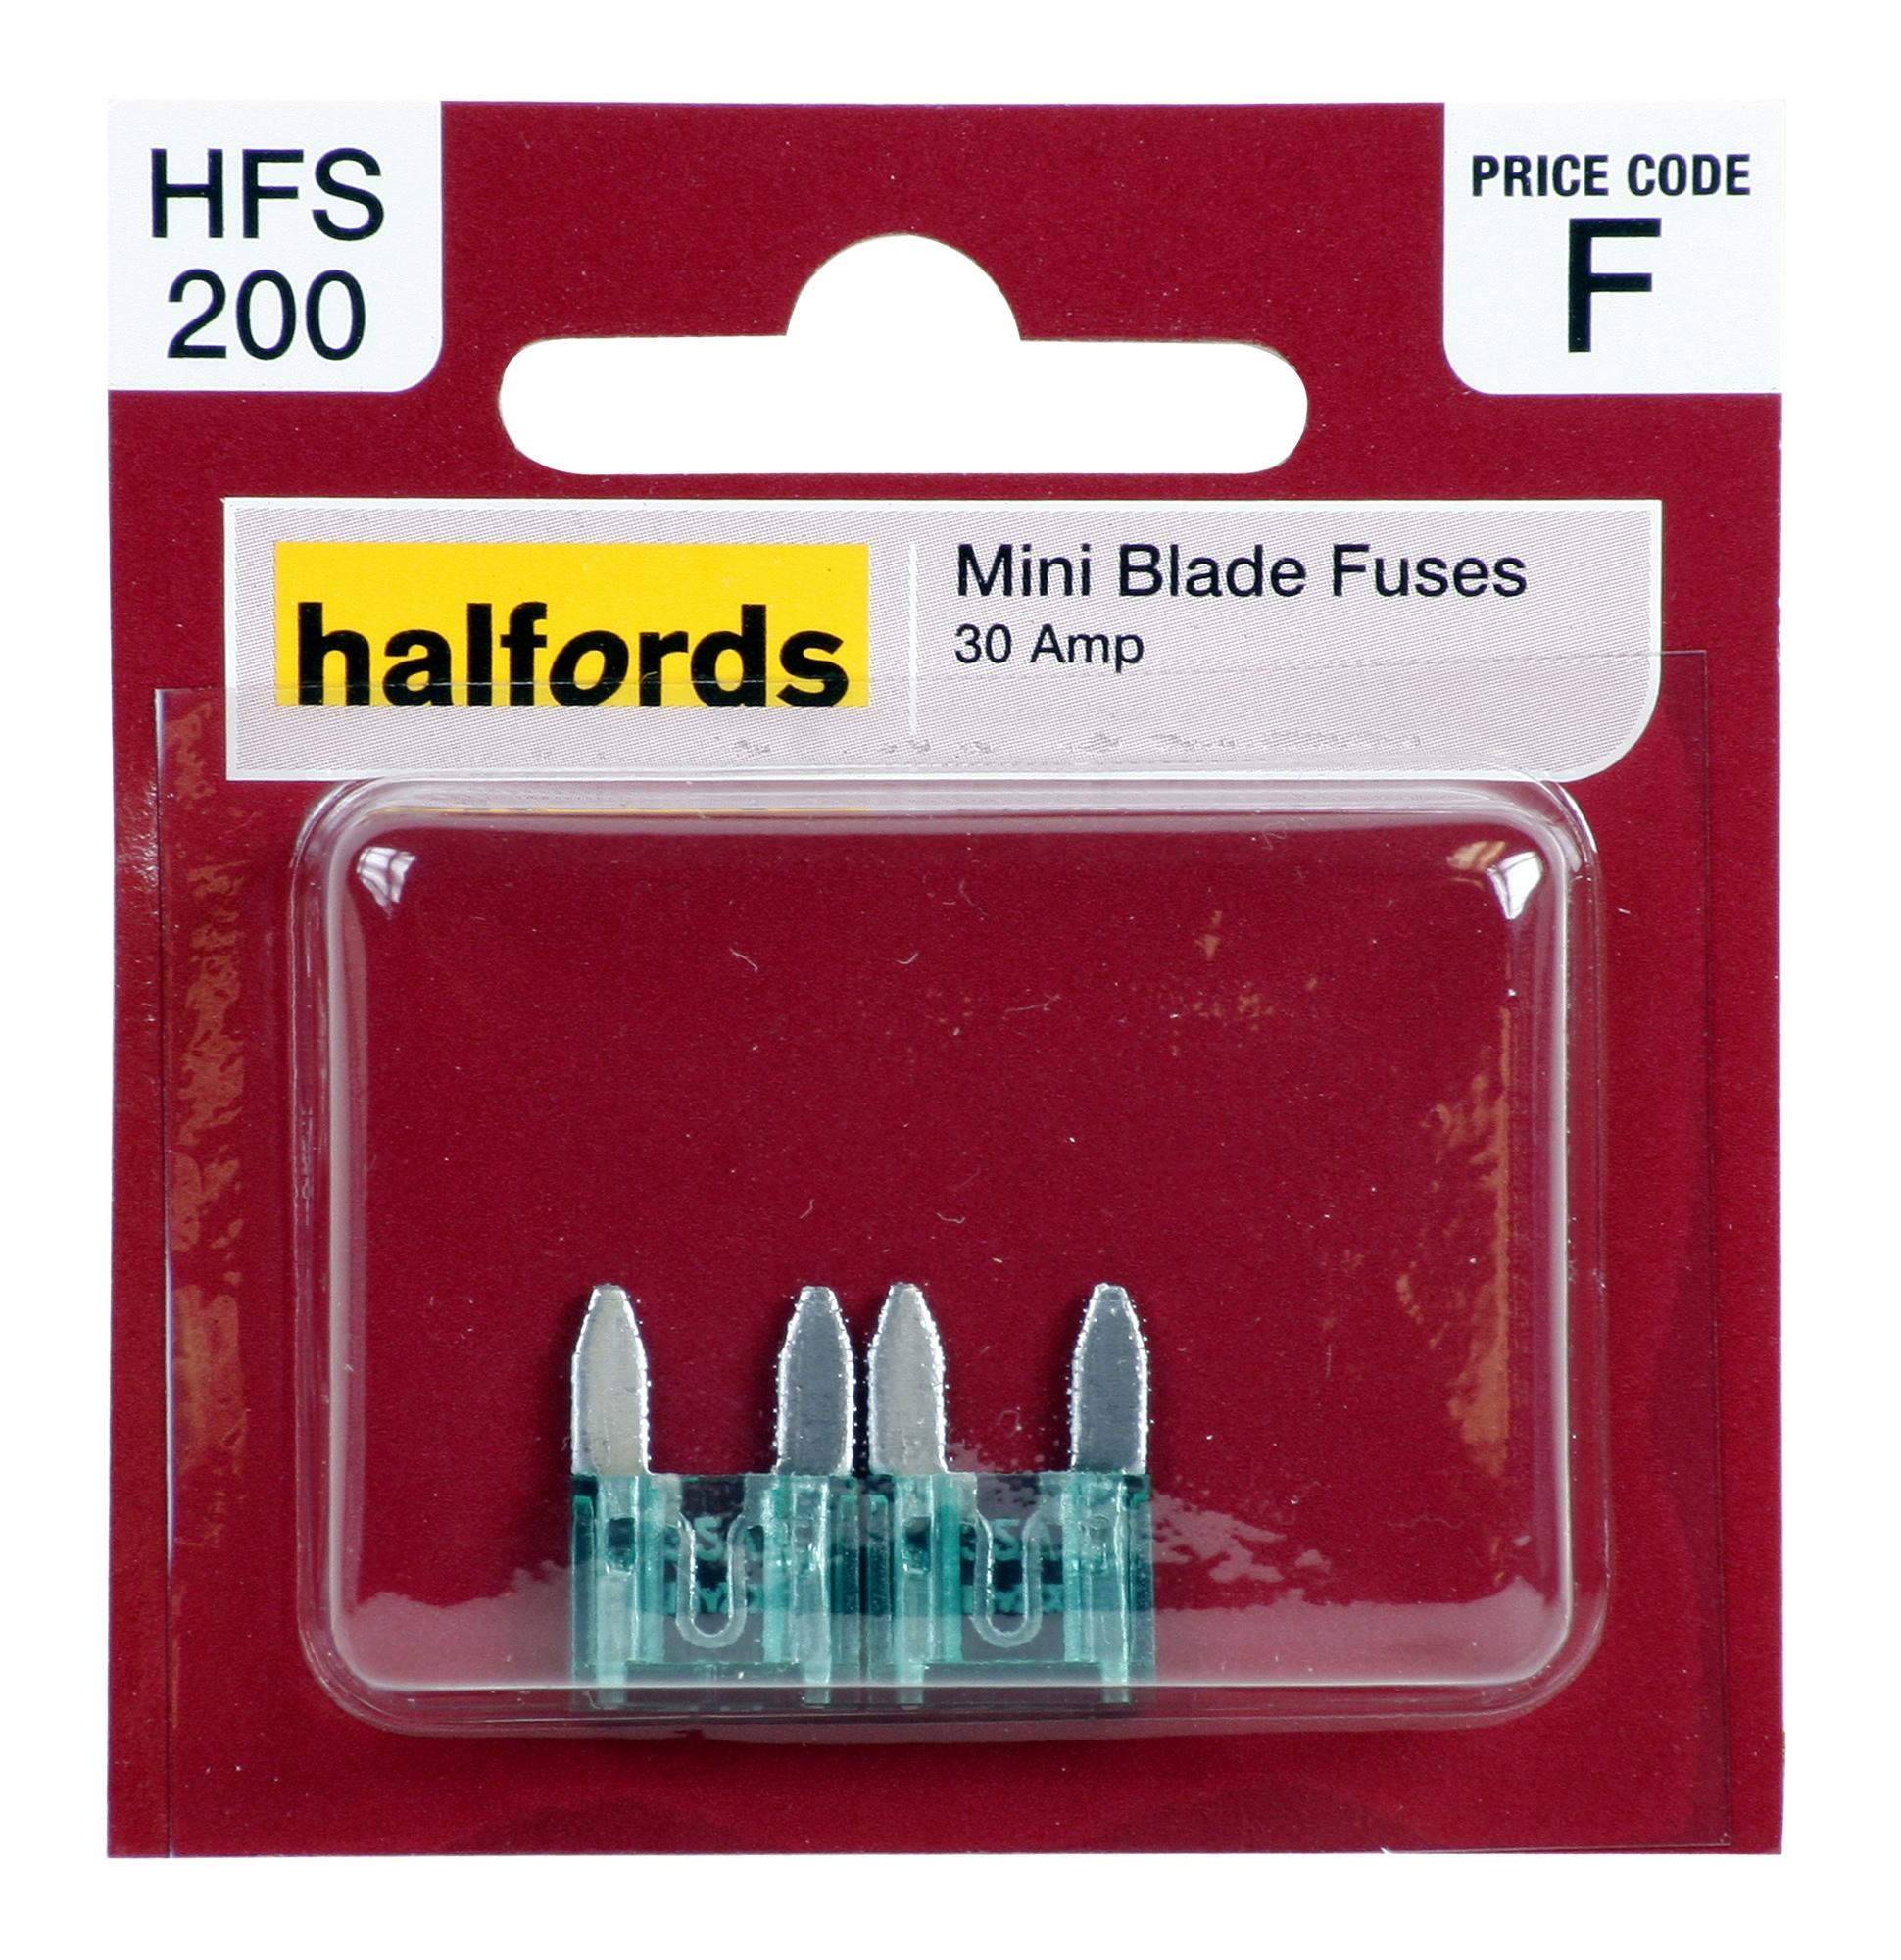 Halfords Mini Blade Fuses 30 Amp (Hfs200)